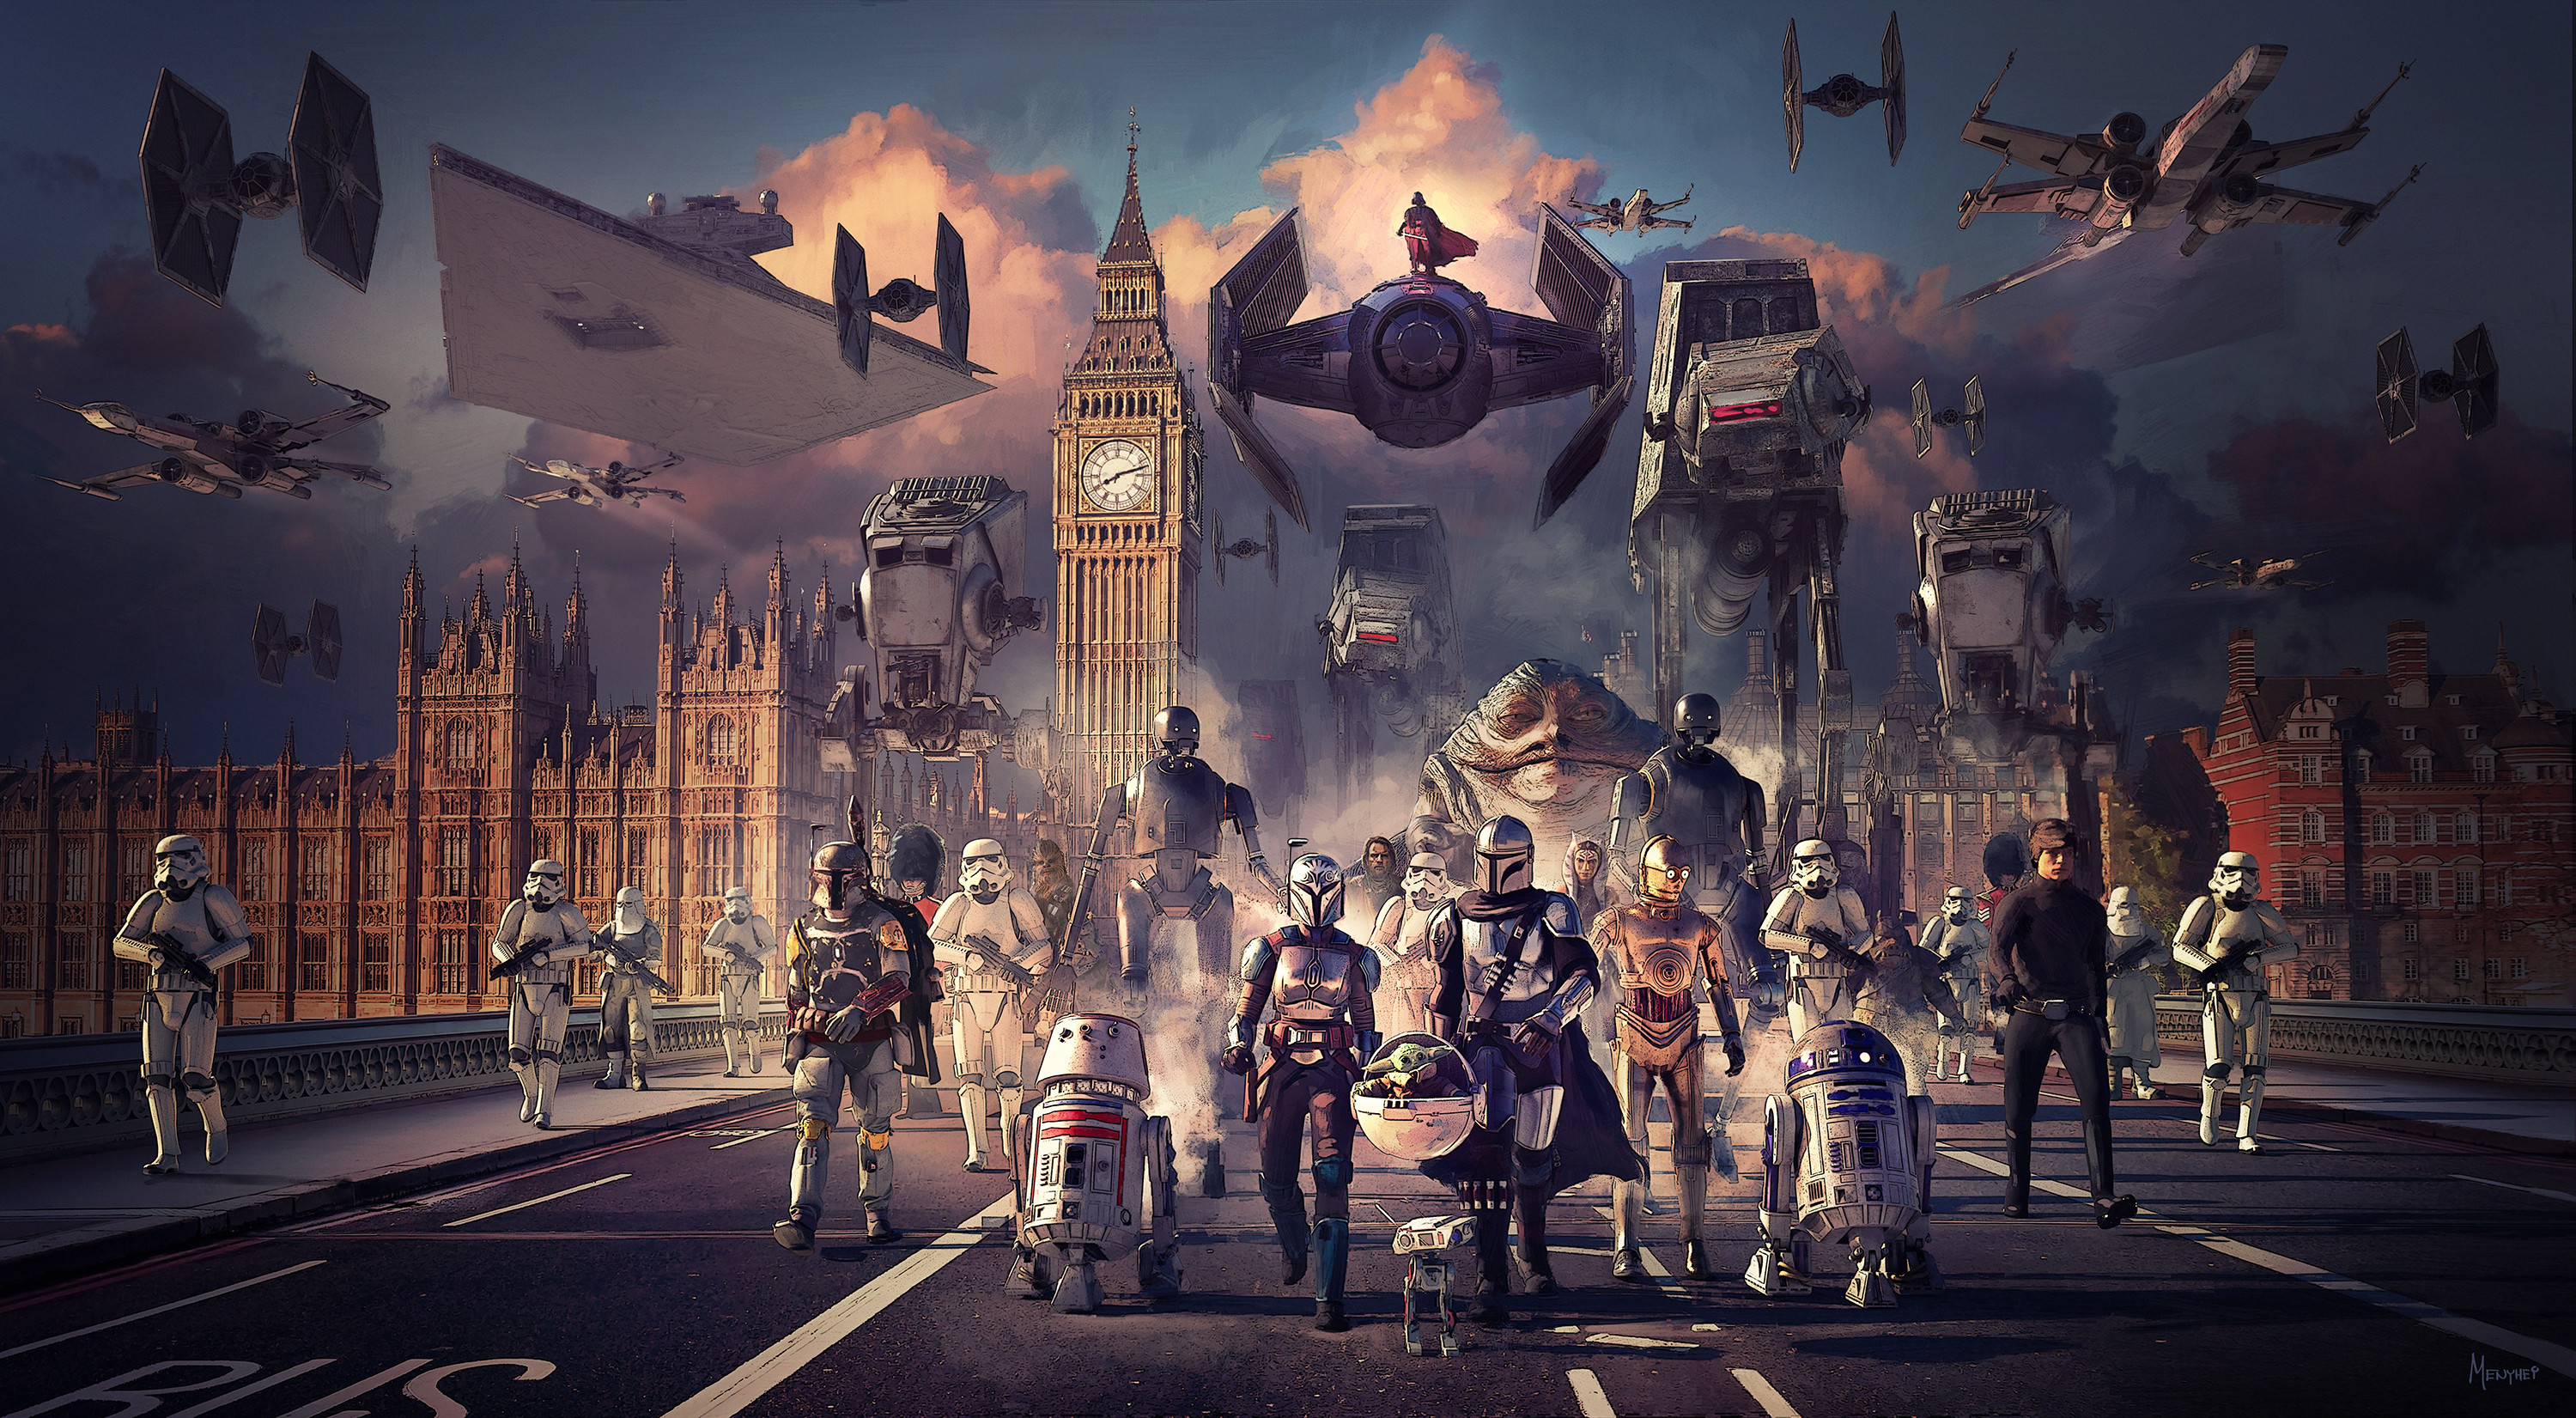 Star Wars in London by Saby Menyhei